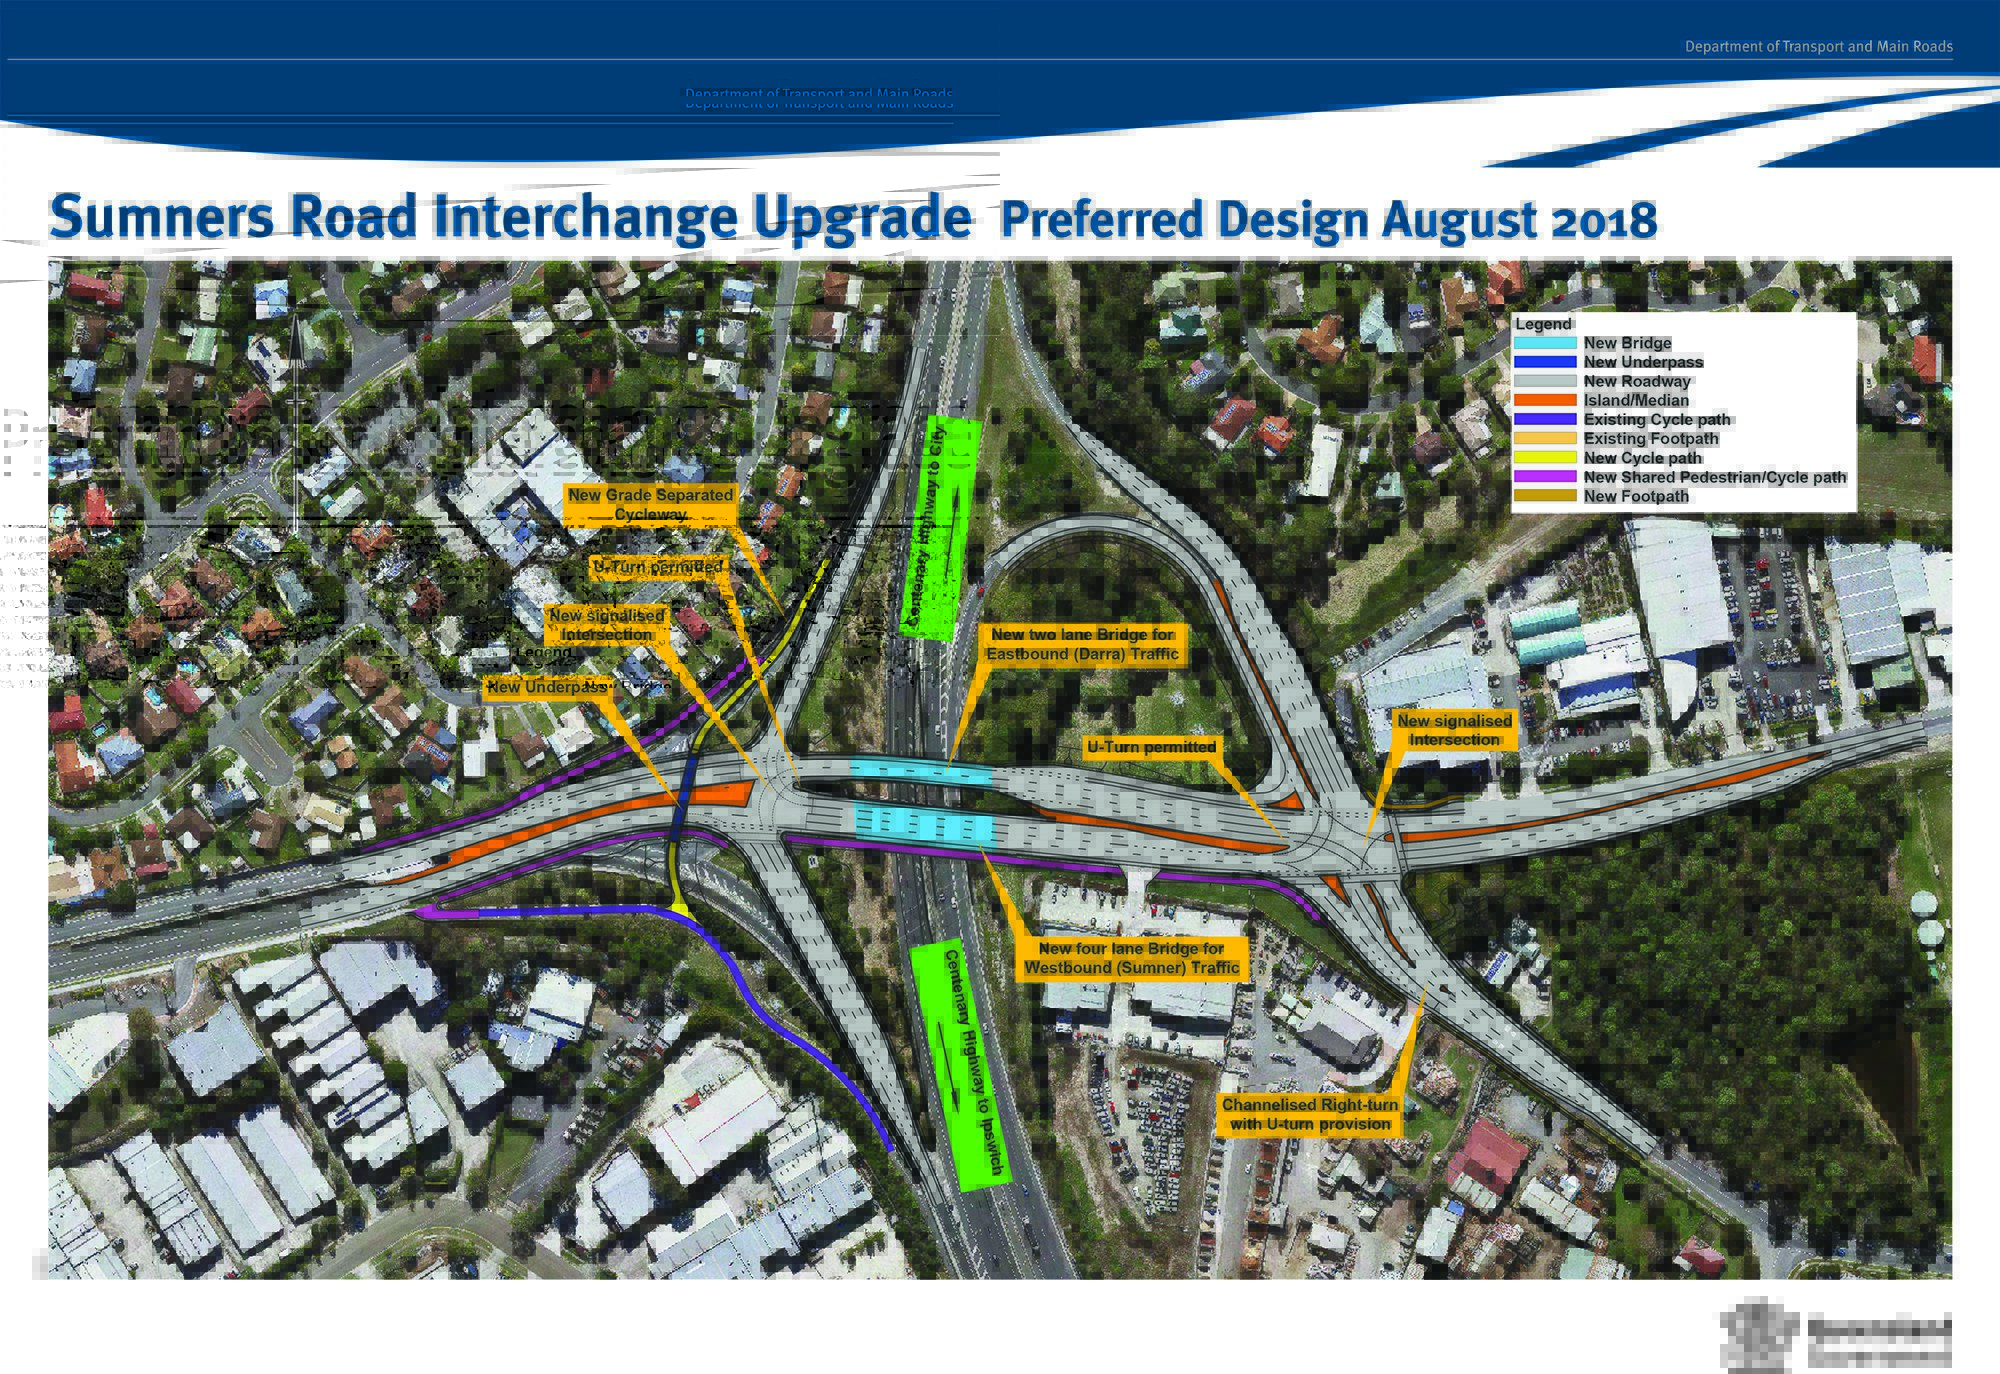 Works underway on $80m Sumners Road interchange upgrade in QLD